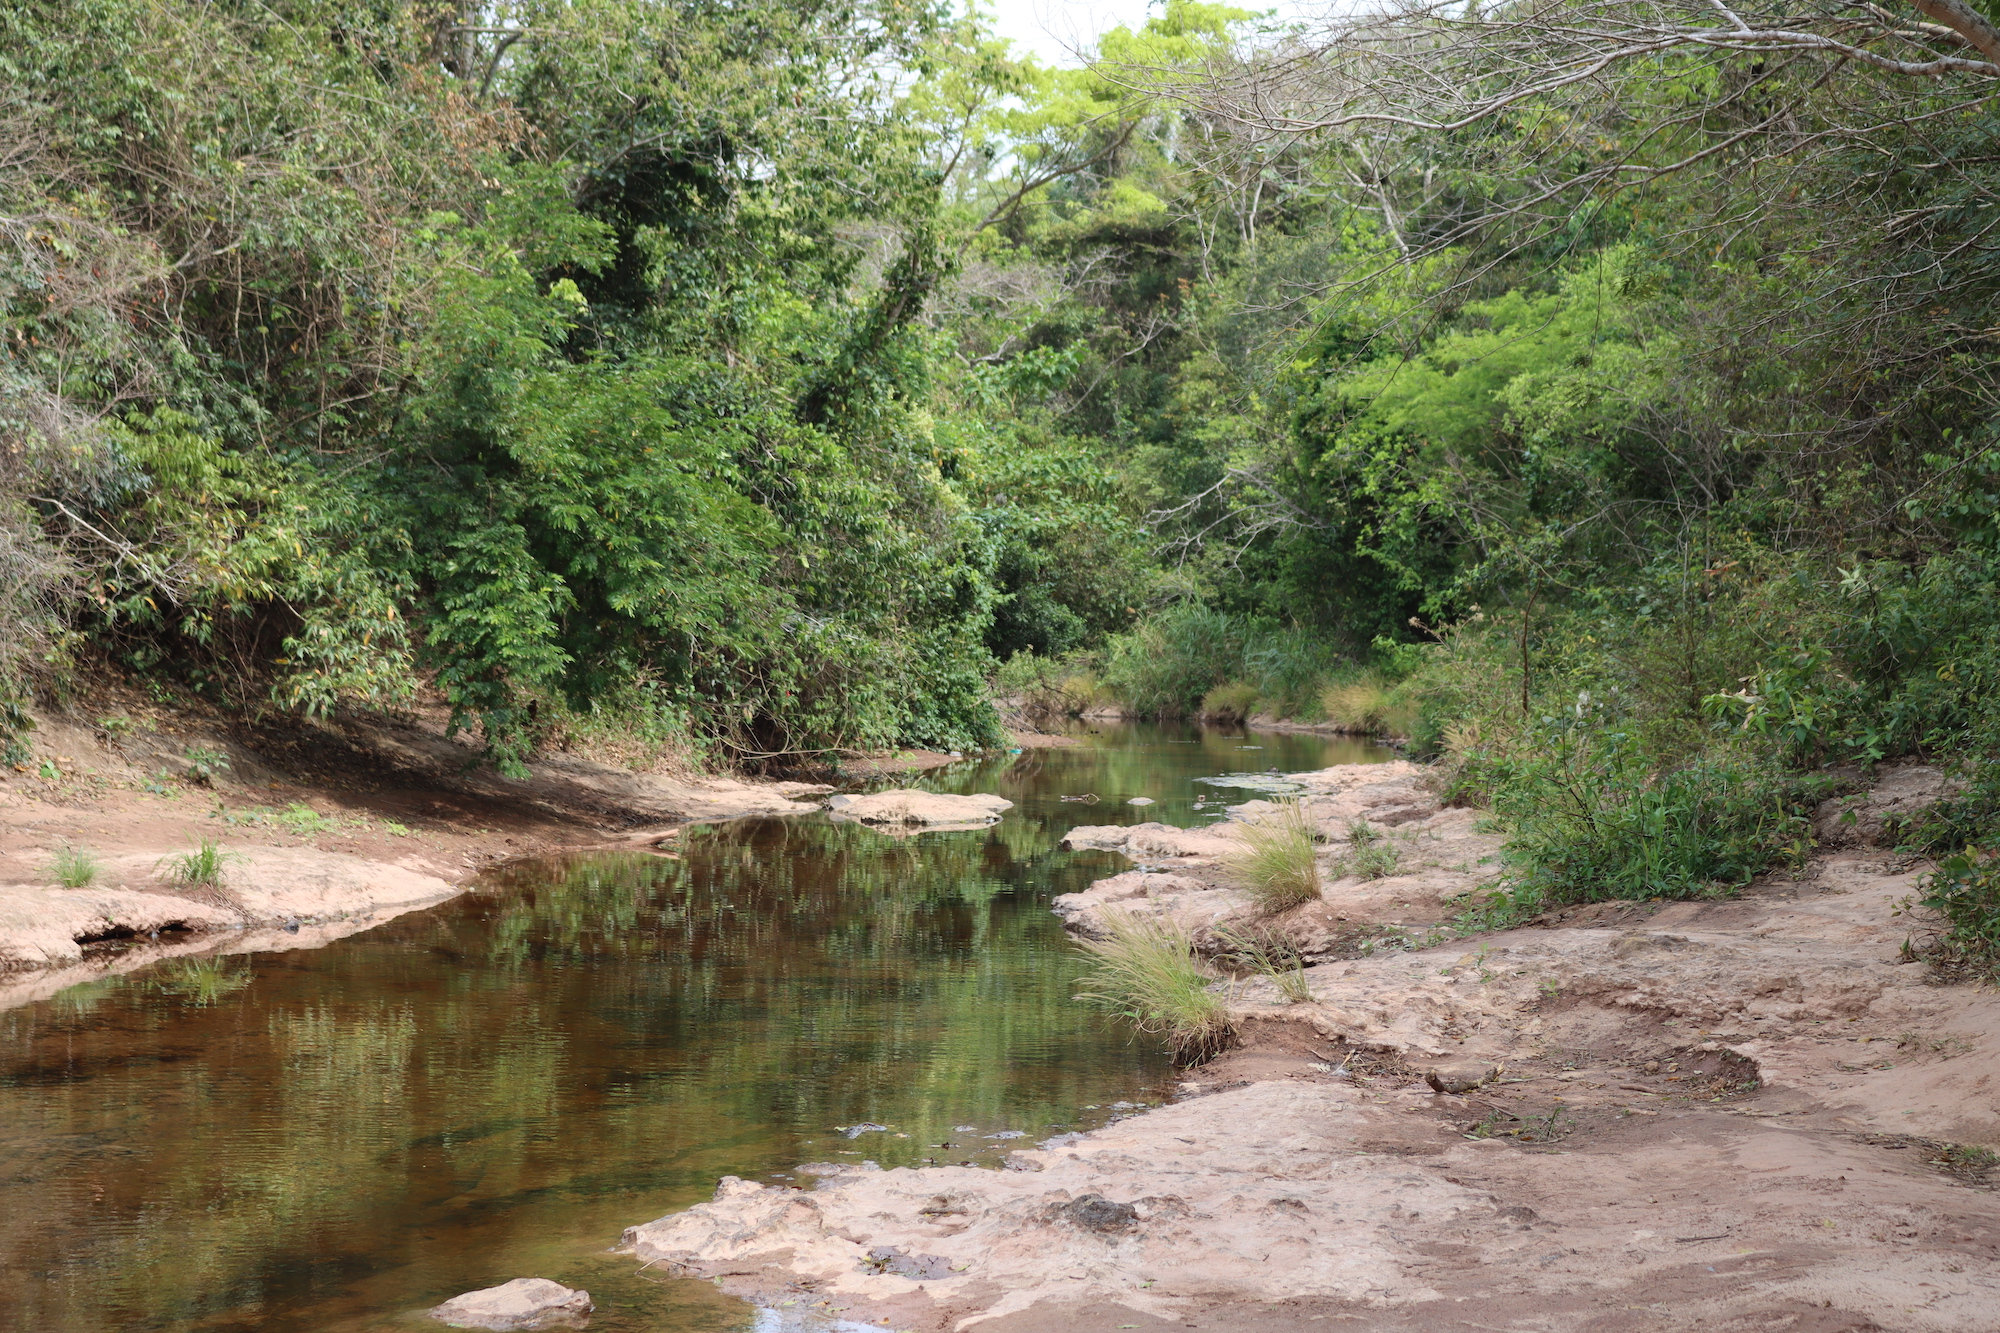 A stream in Amboró National Park. Image by Iván Paredes.